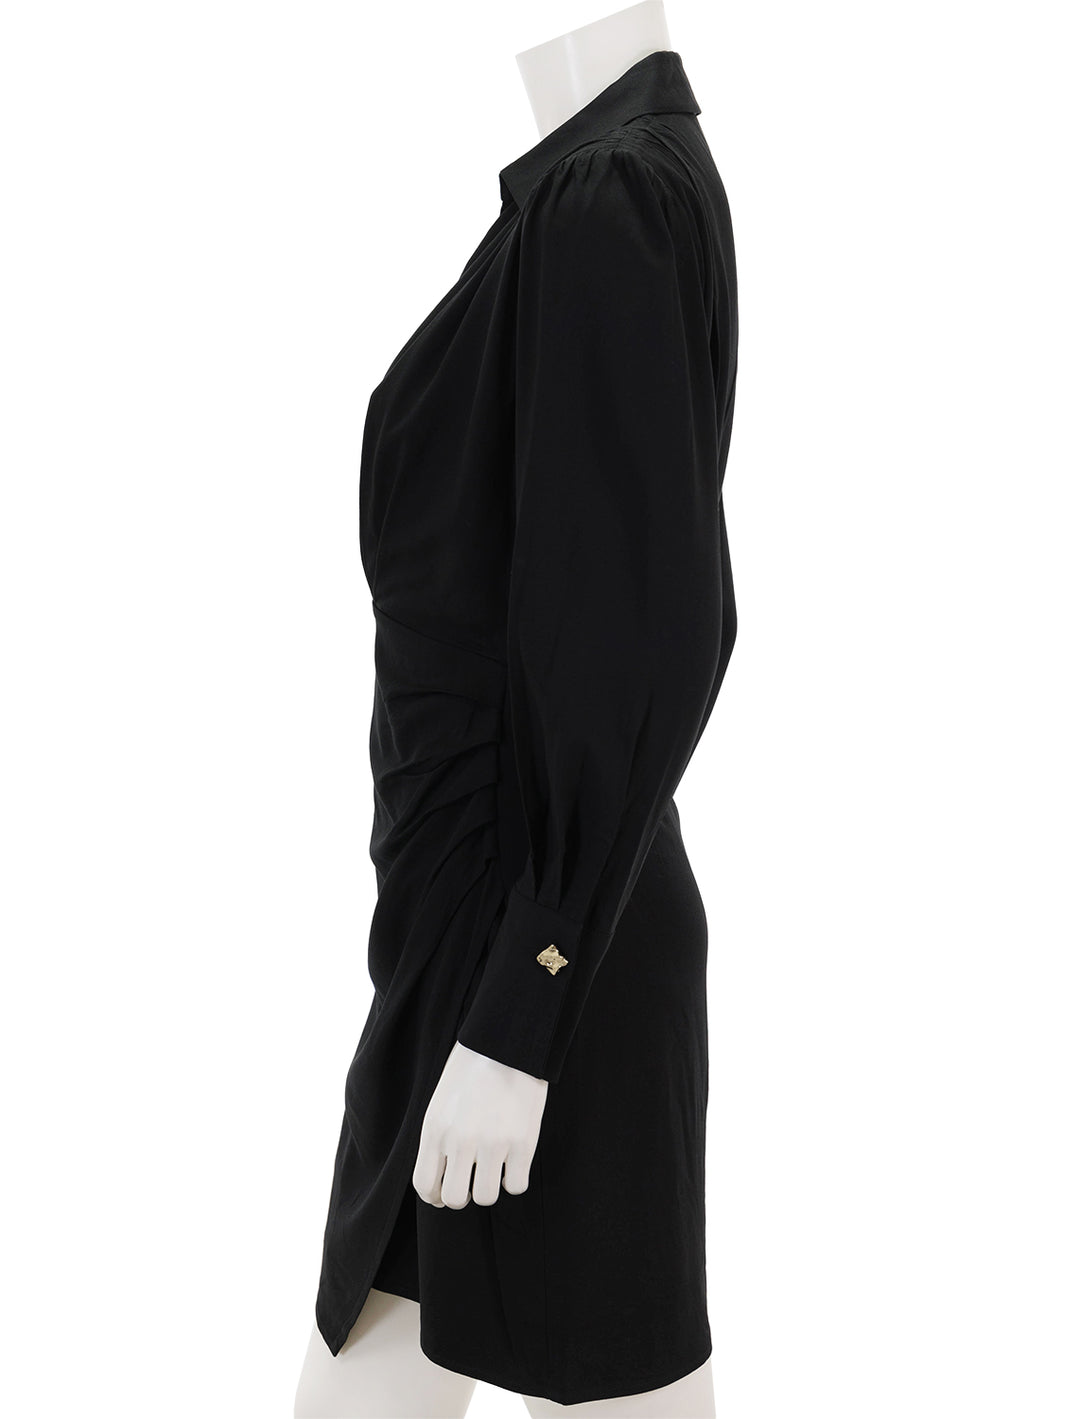 Side view of Suncoo Paris' cristel dress in noir.